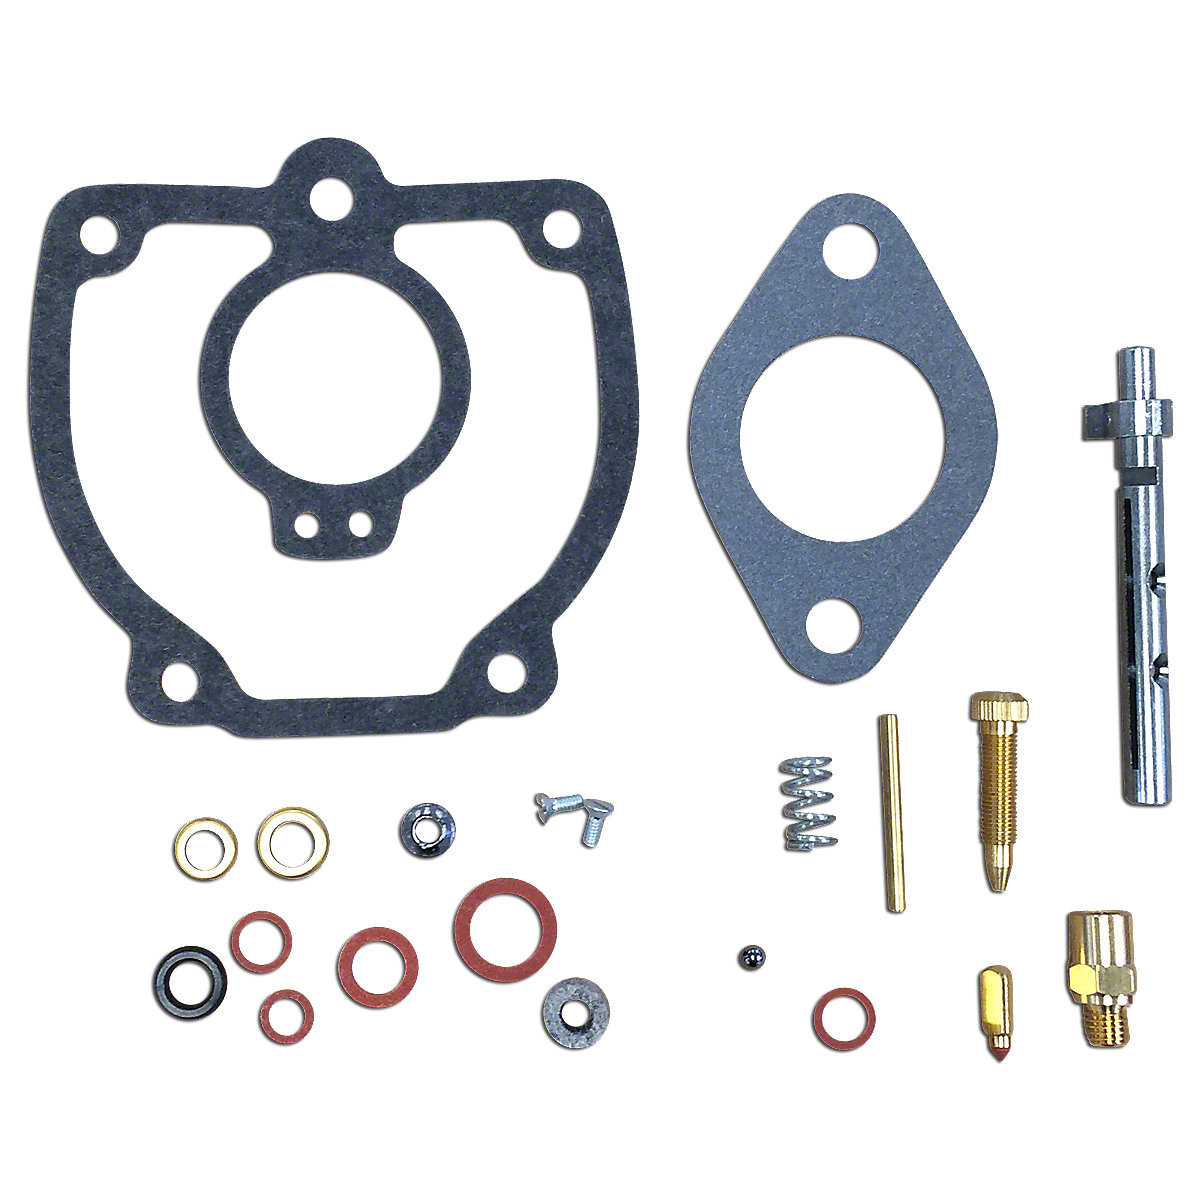 Basic Carburetor Repair Kit For Farmall: I6, M, MV, O6, W6.